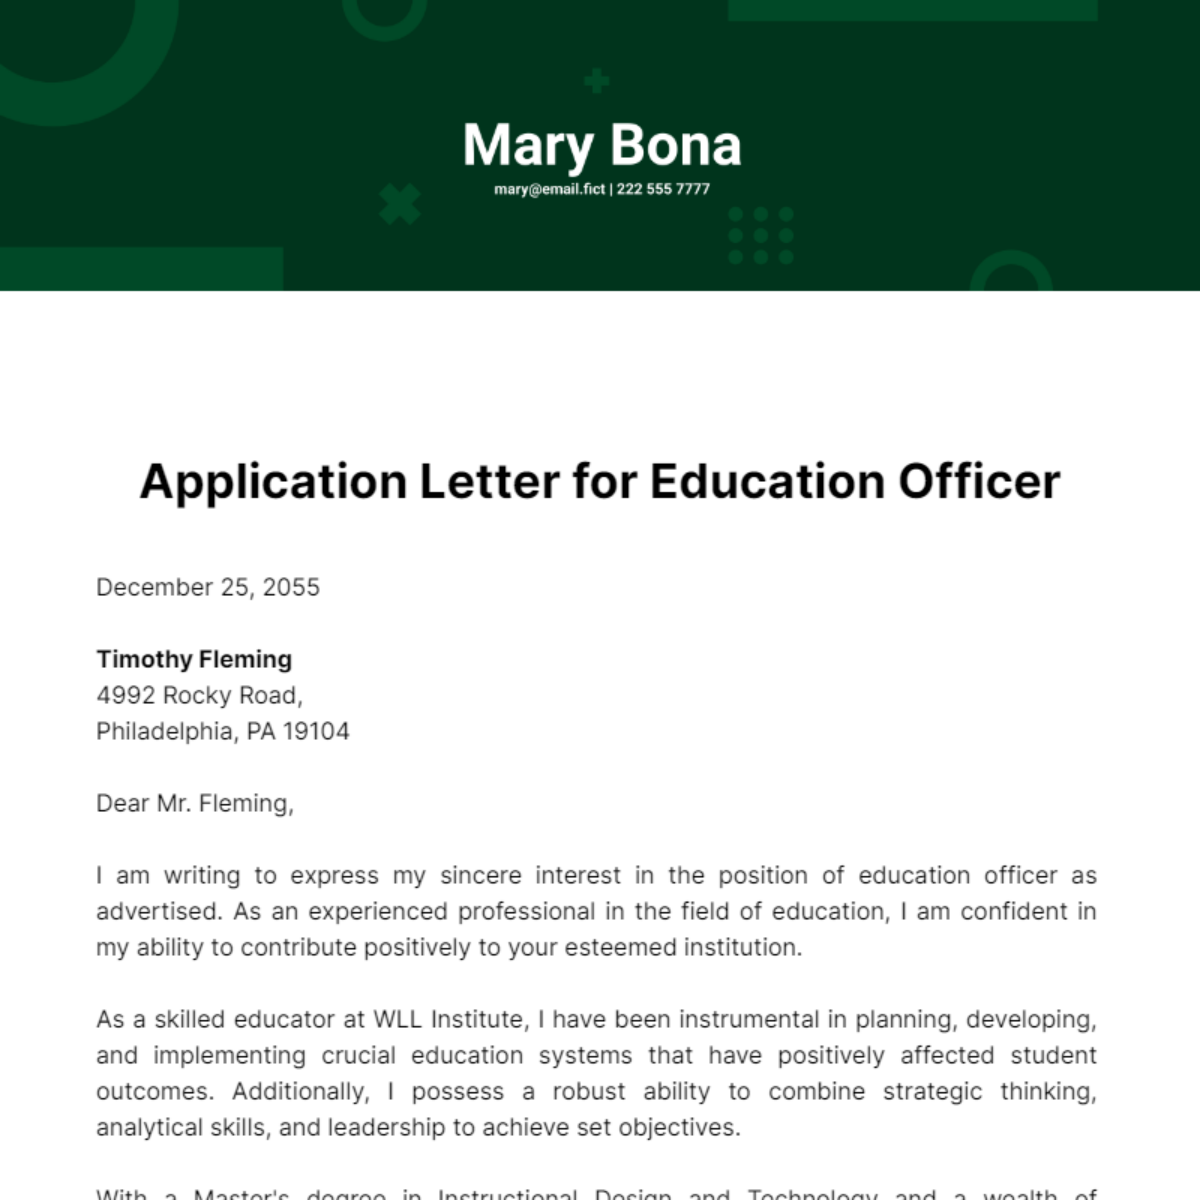 Application Letter for Education Officer Template